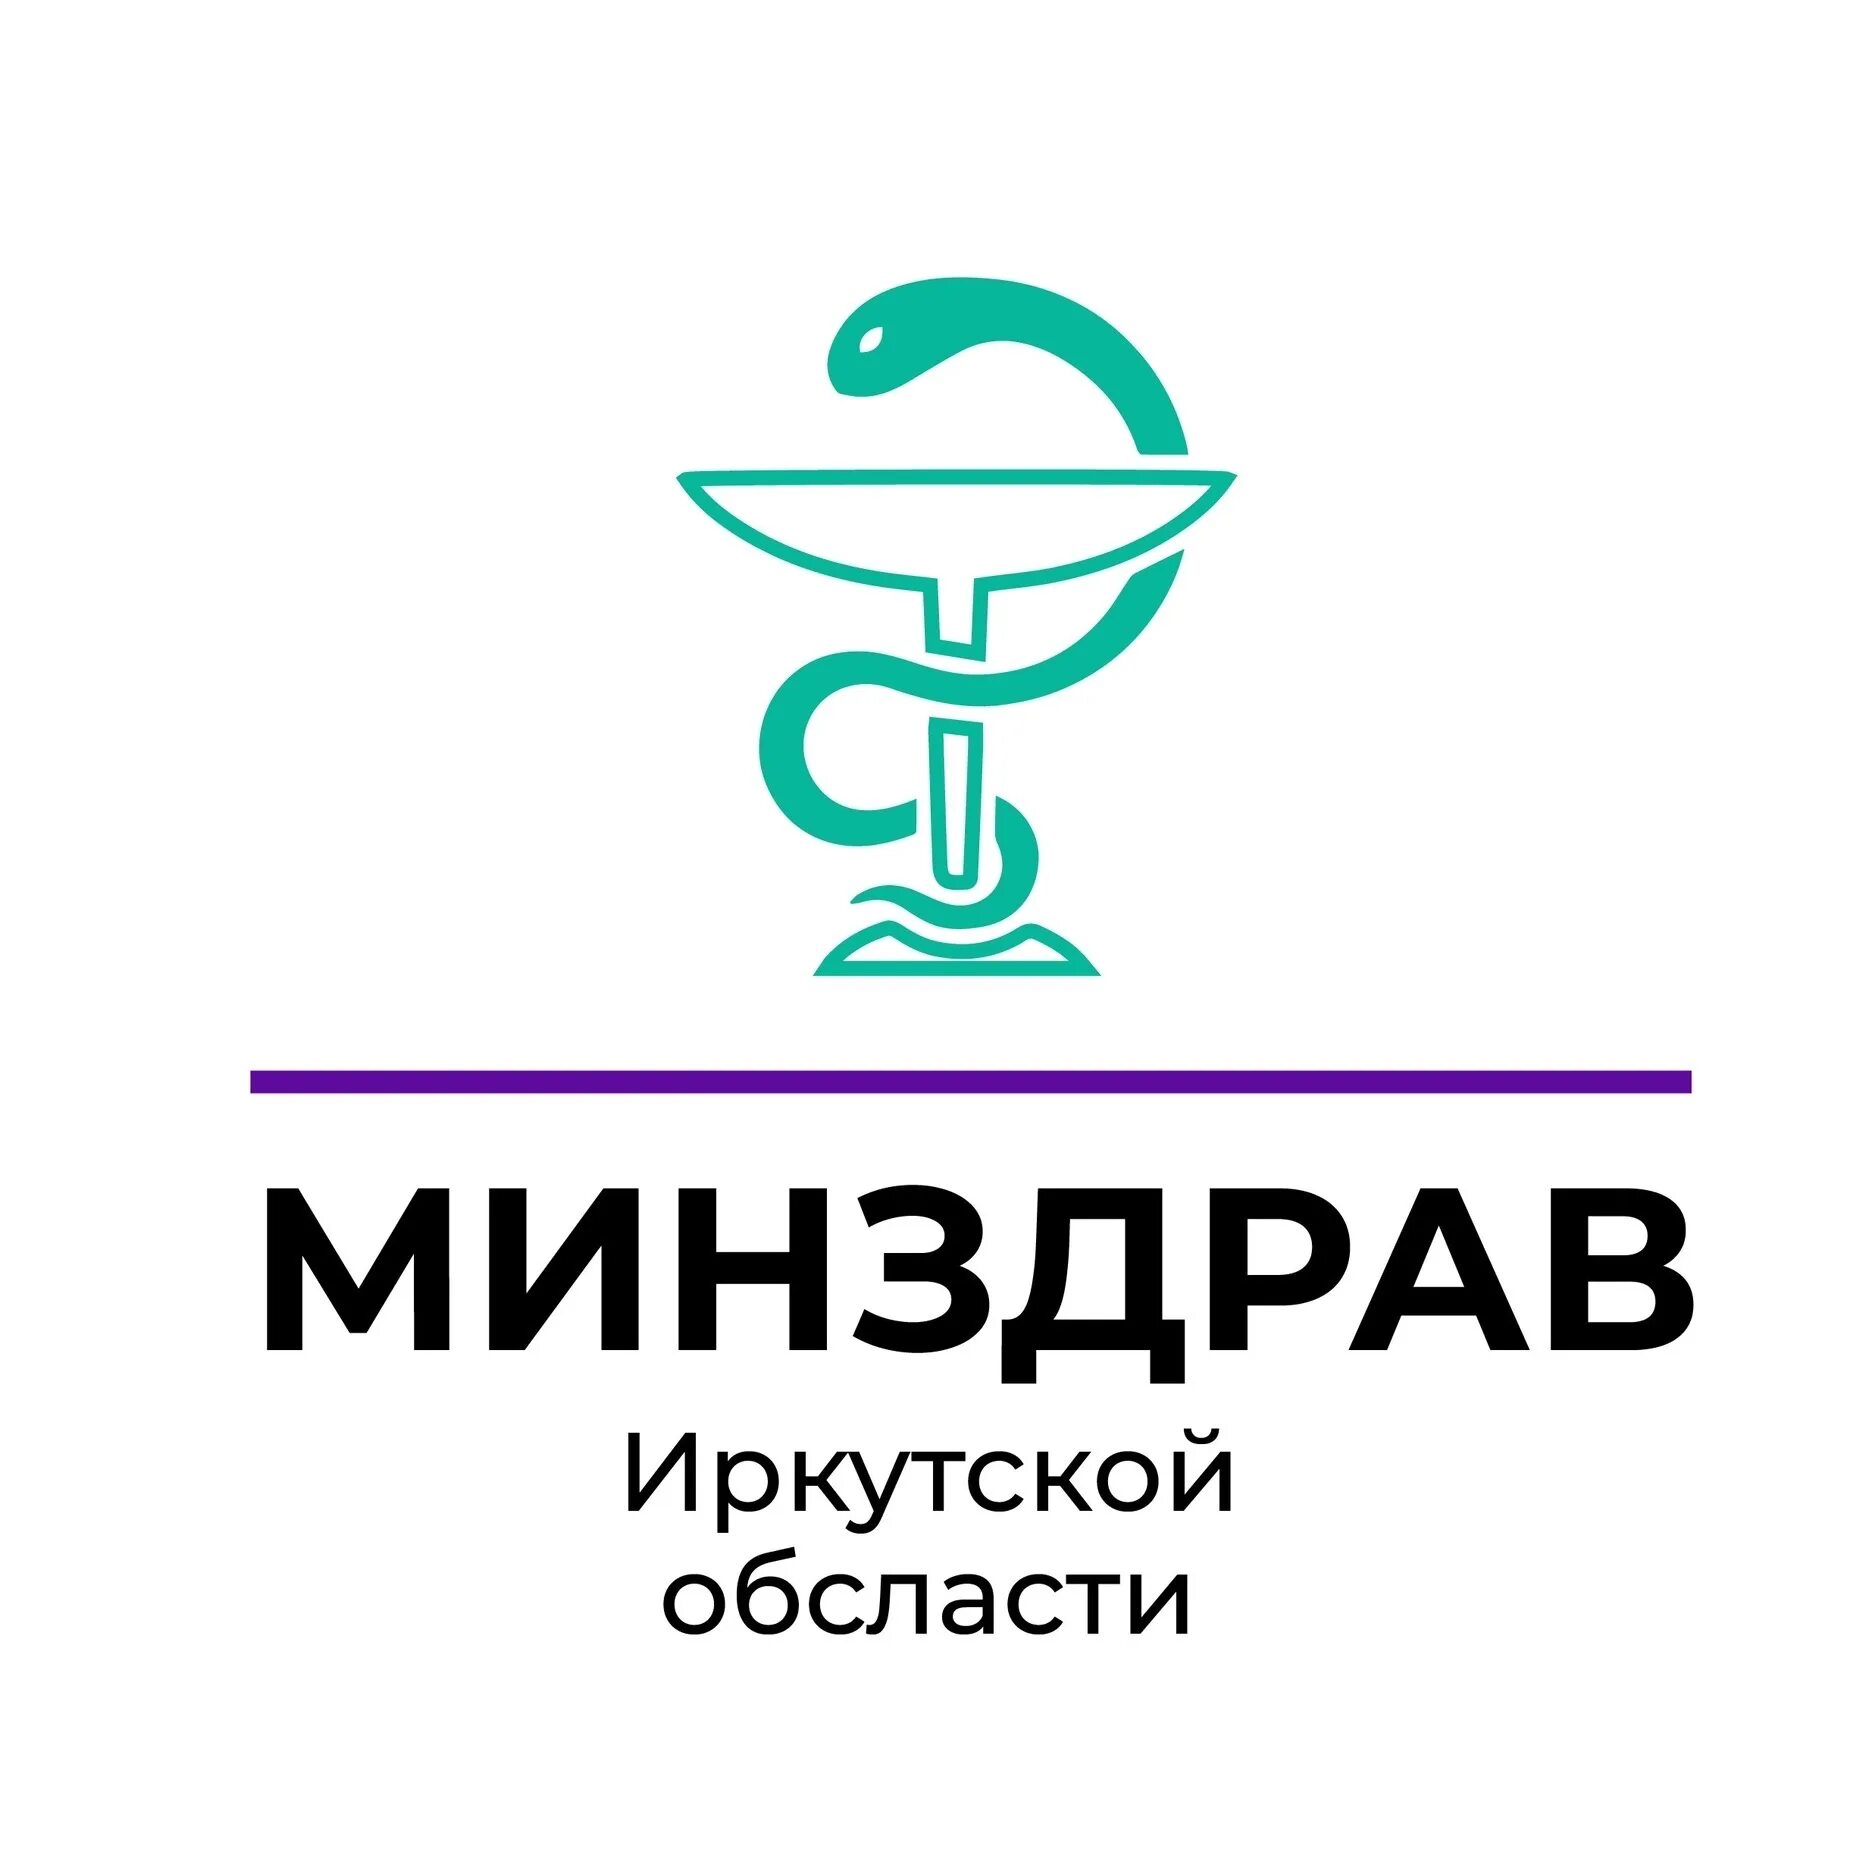 Телефон минздрава иркутской. Министерство здравоохранения Иркутск. Минздрав Иркутской области лого.